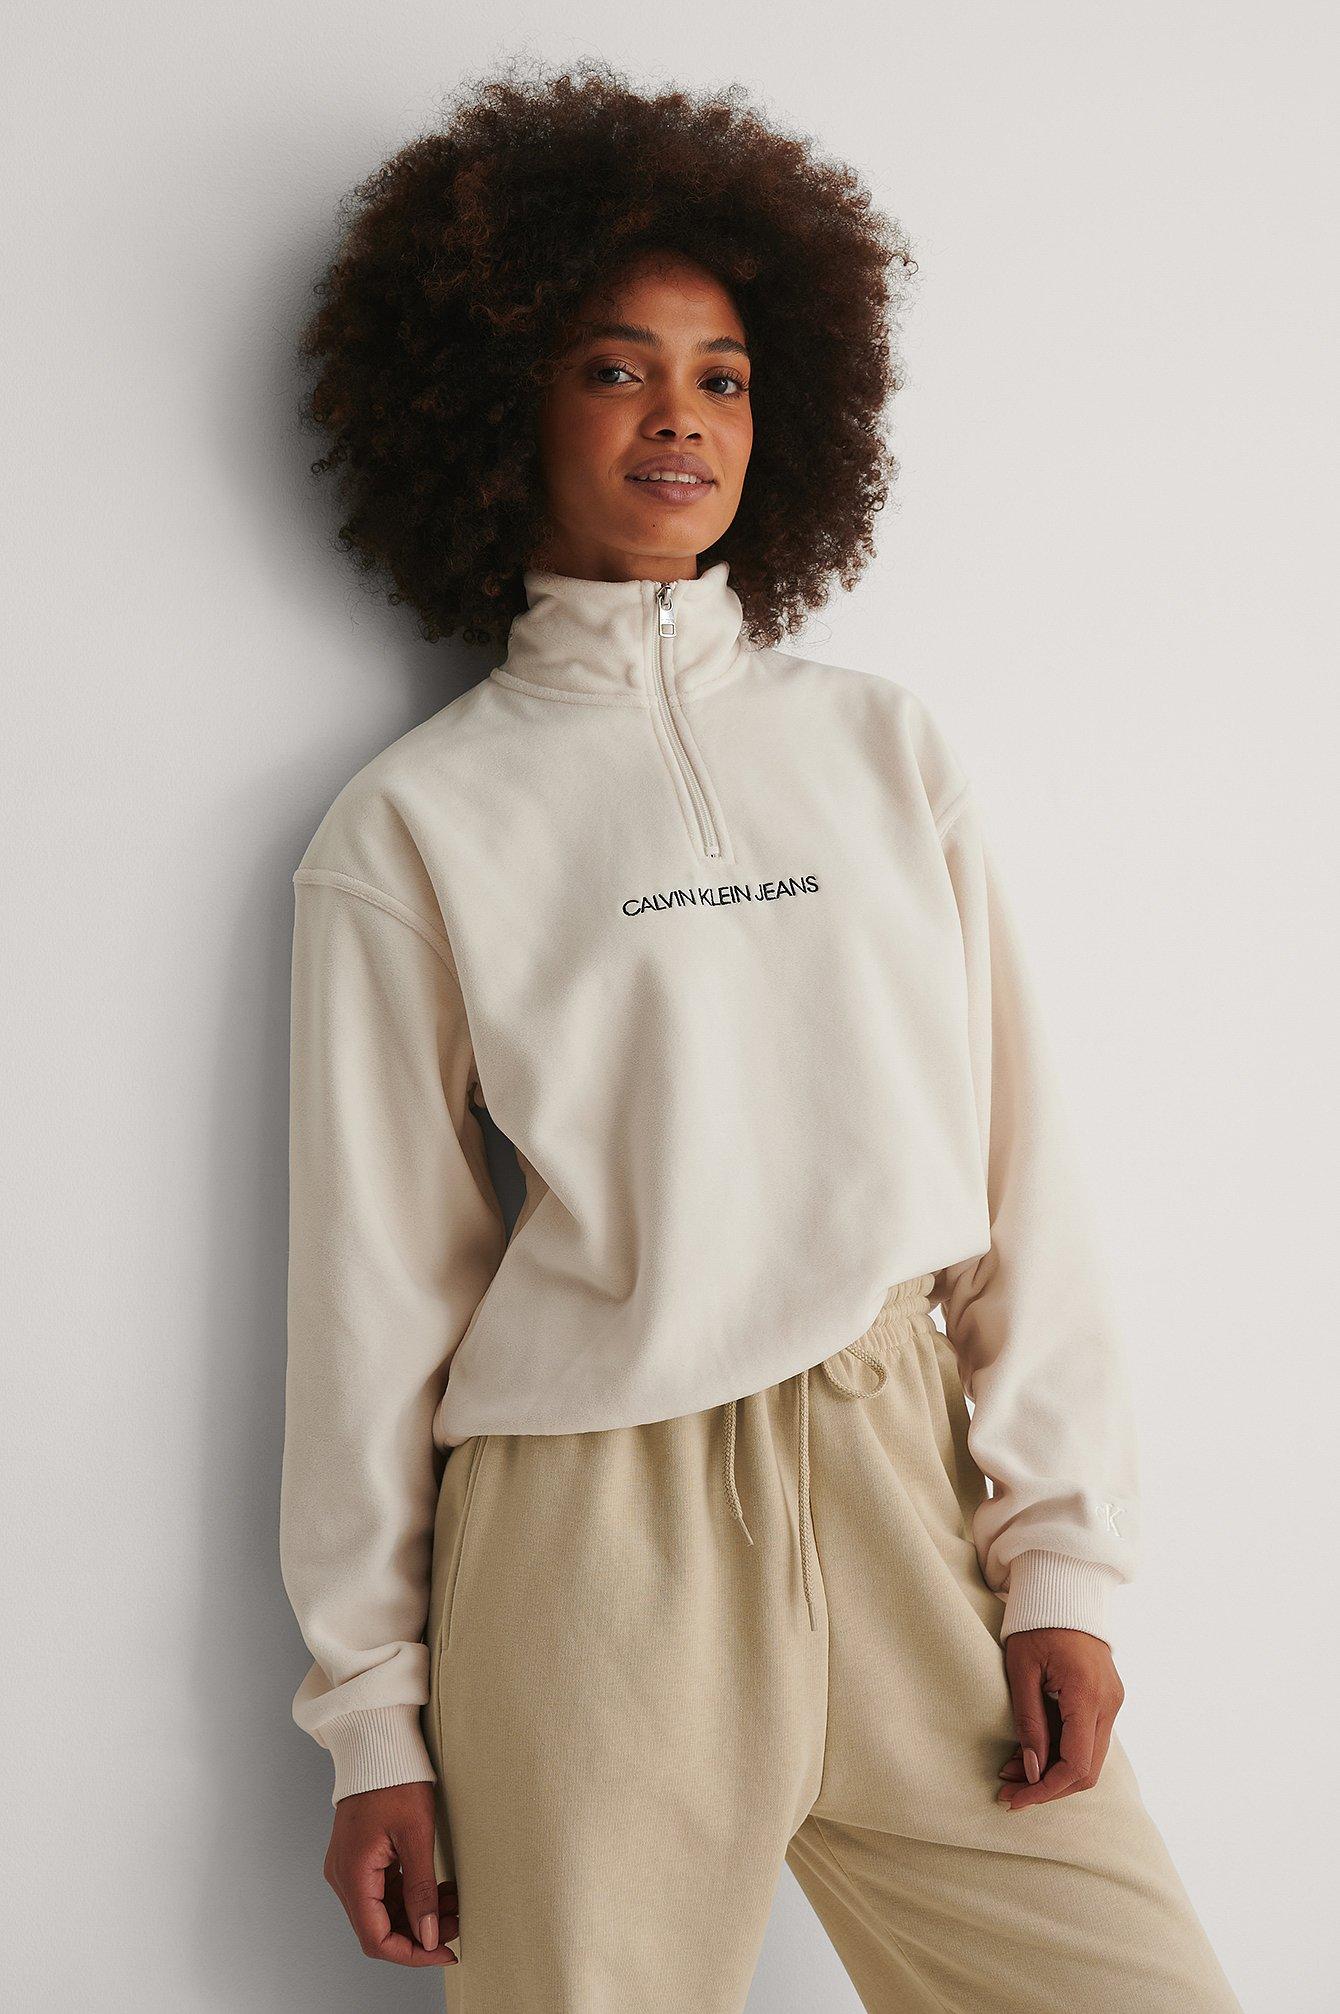 Calvin Klein Beige Polar Fleece Half Zip Sweater in White | Lyst